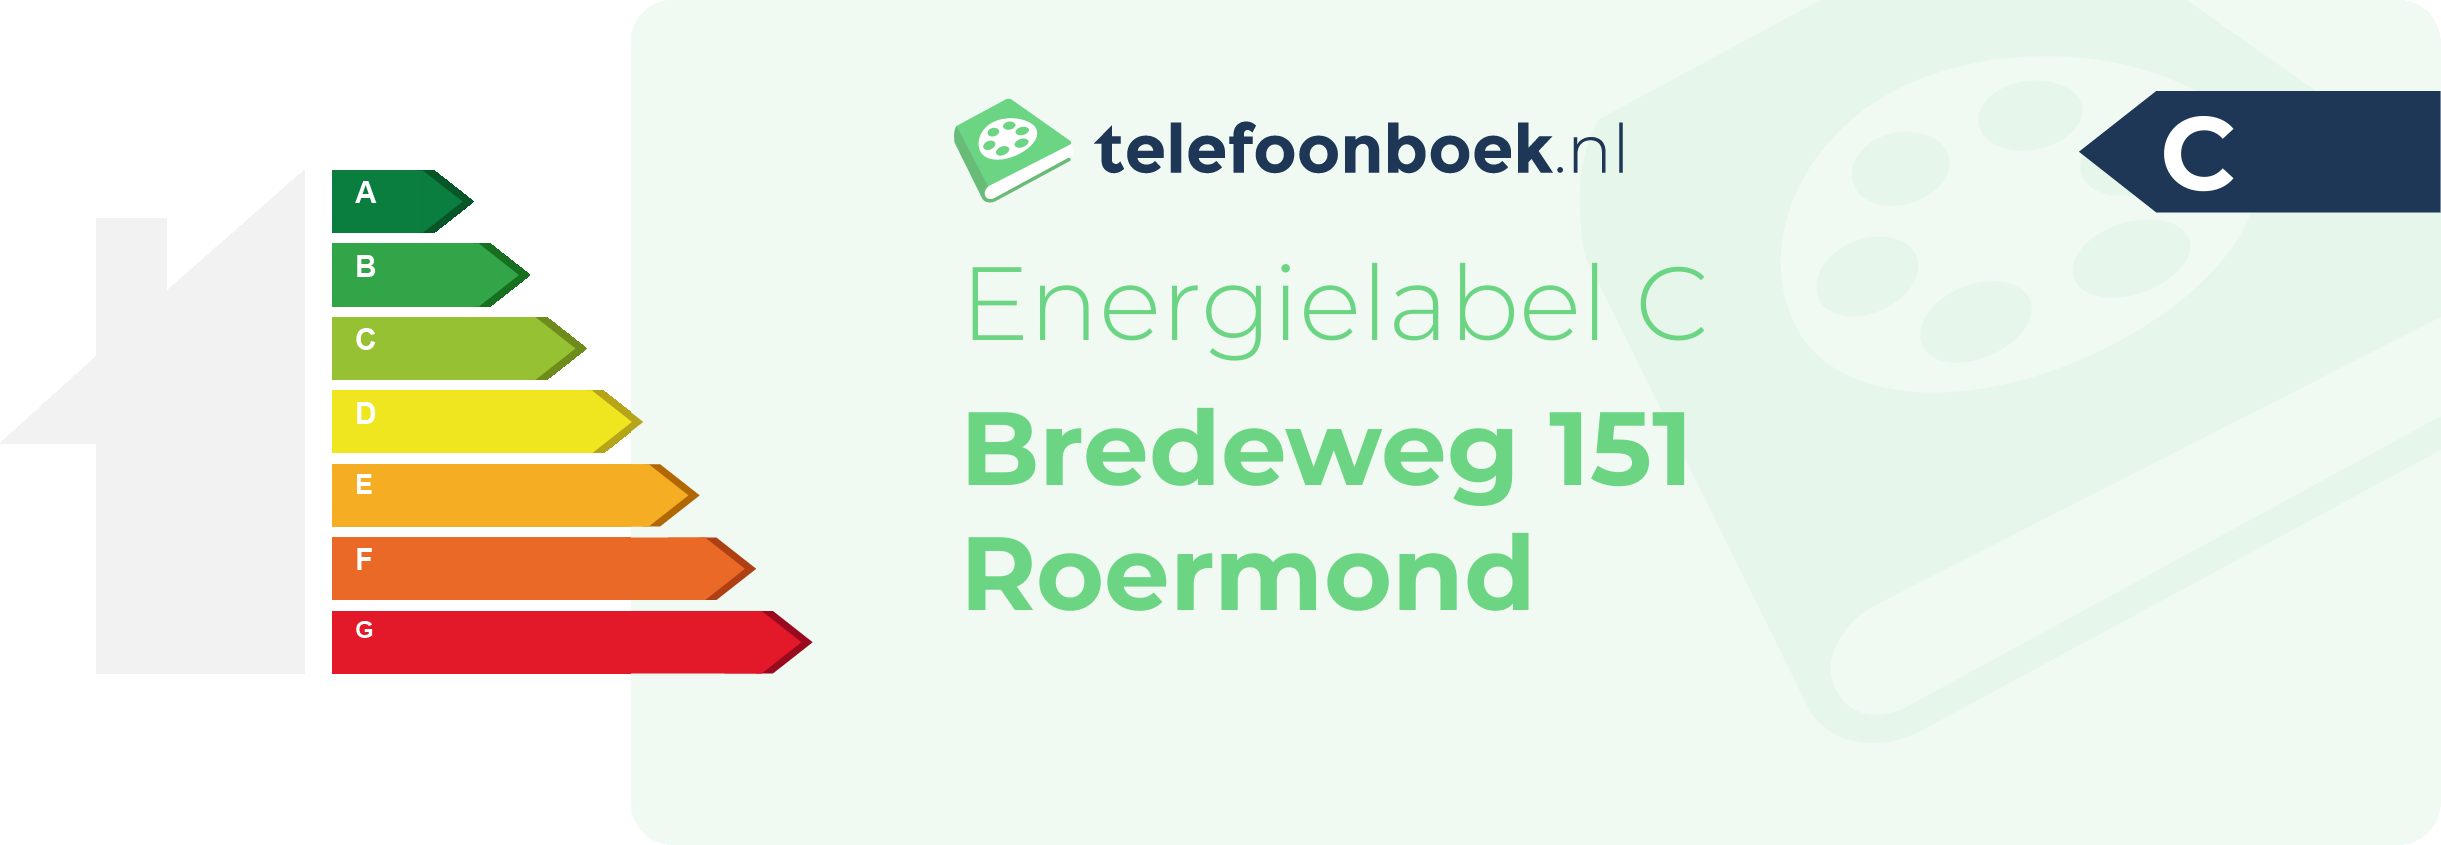 Energielabel Bredeweg 151 Roermond